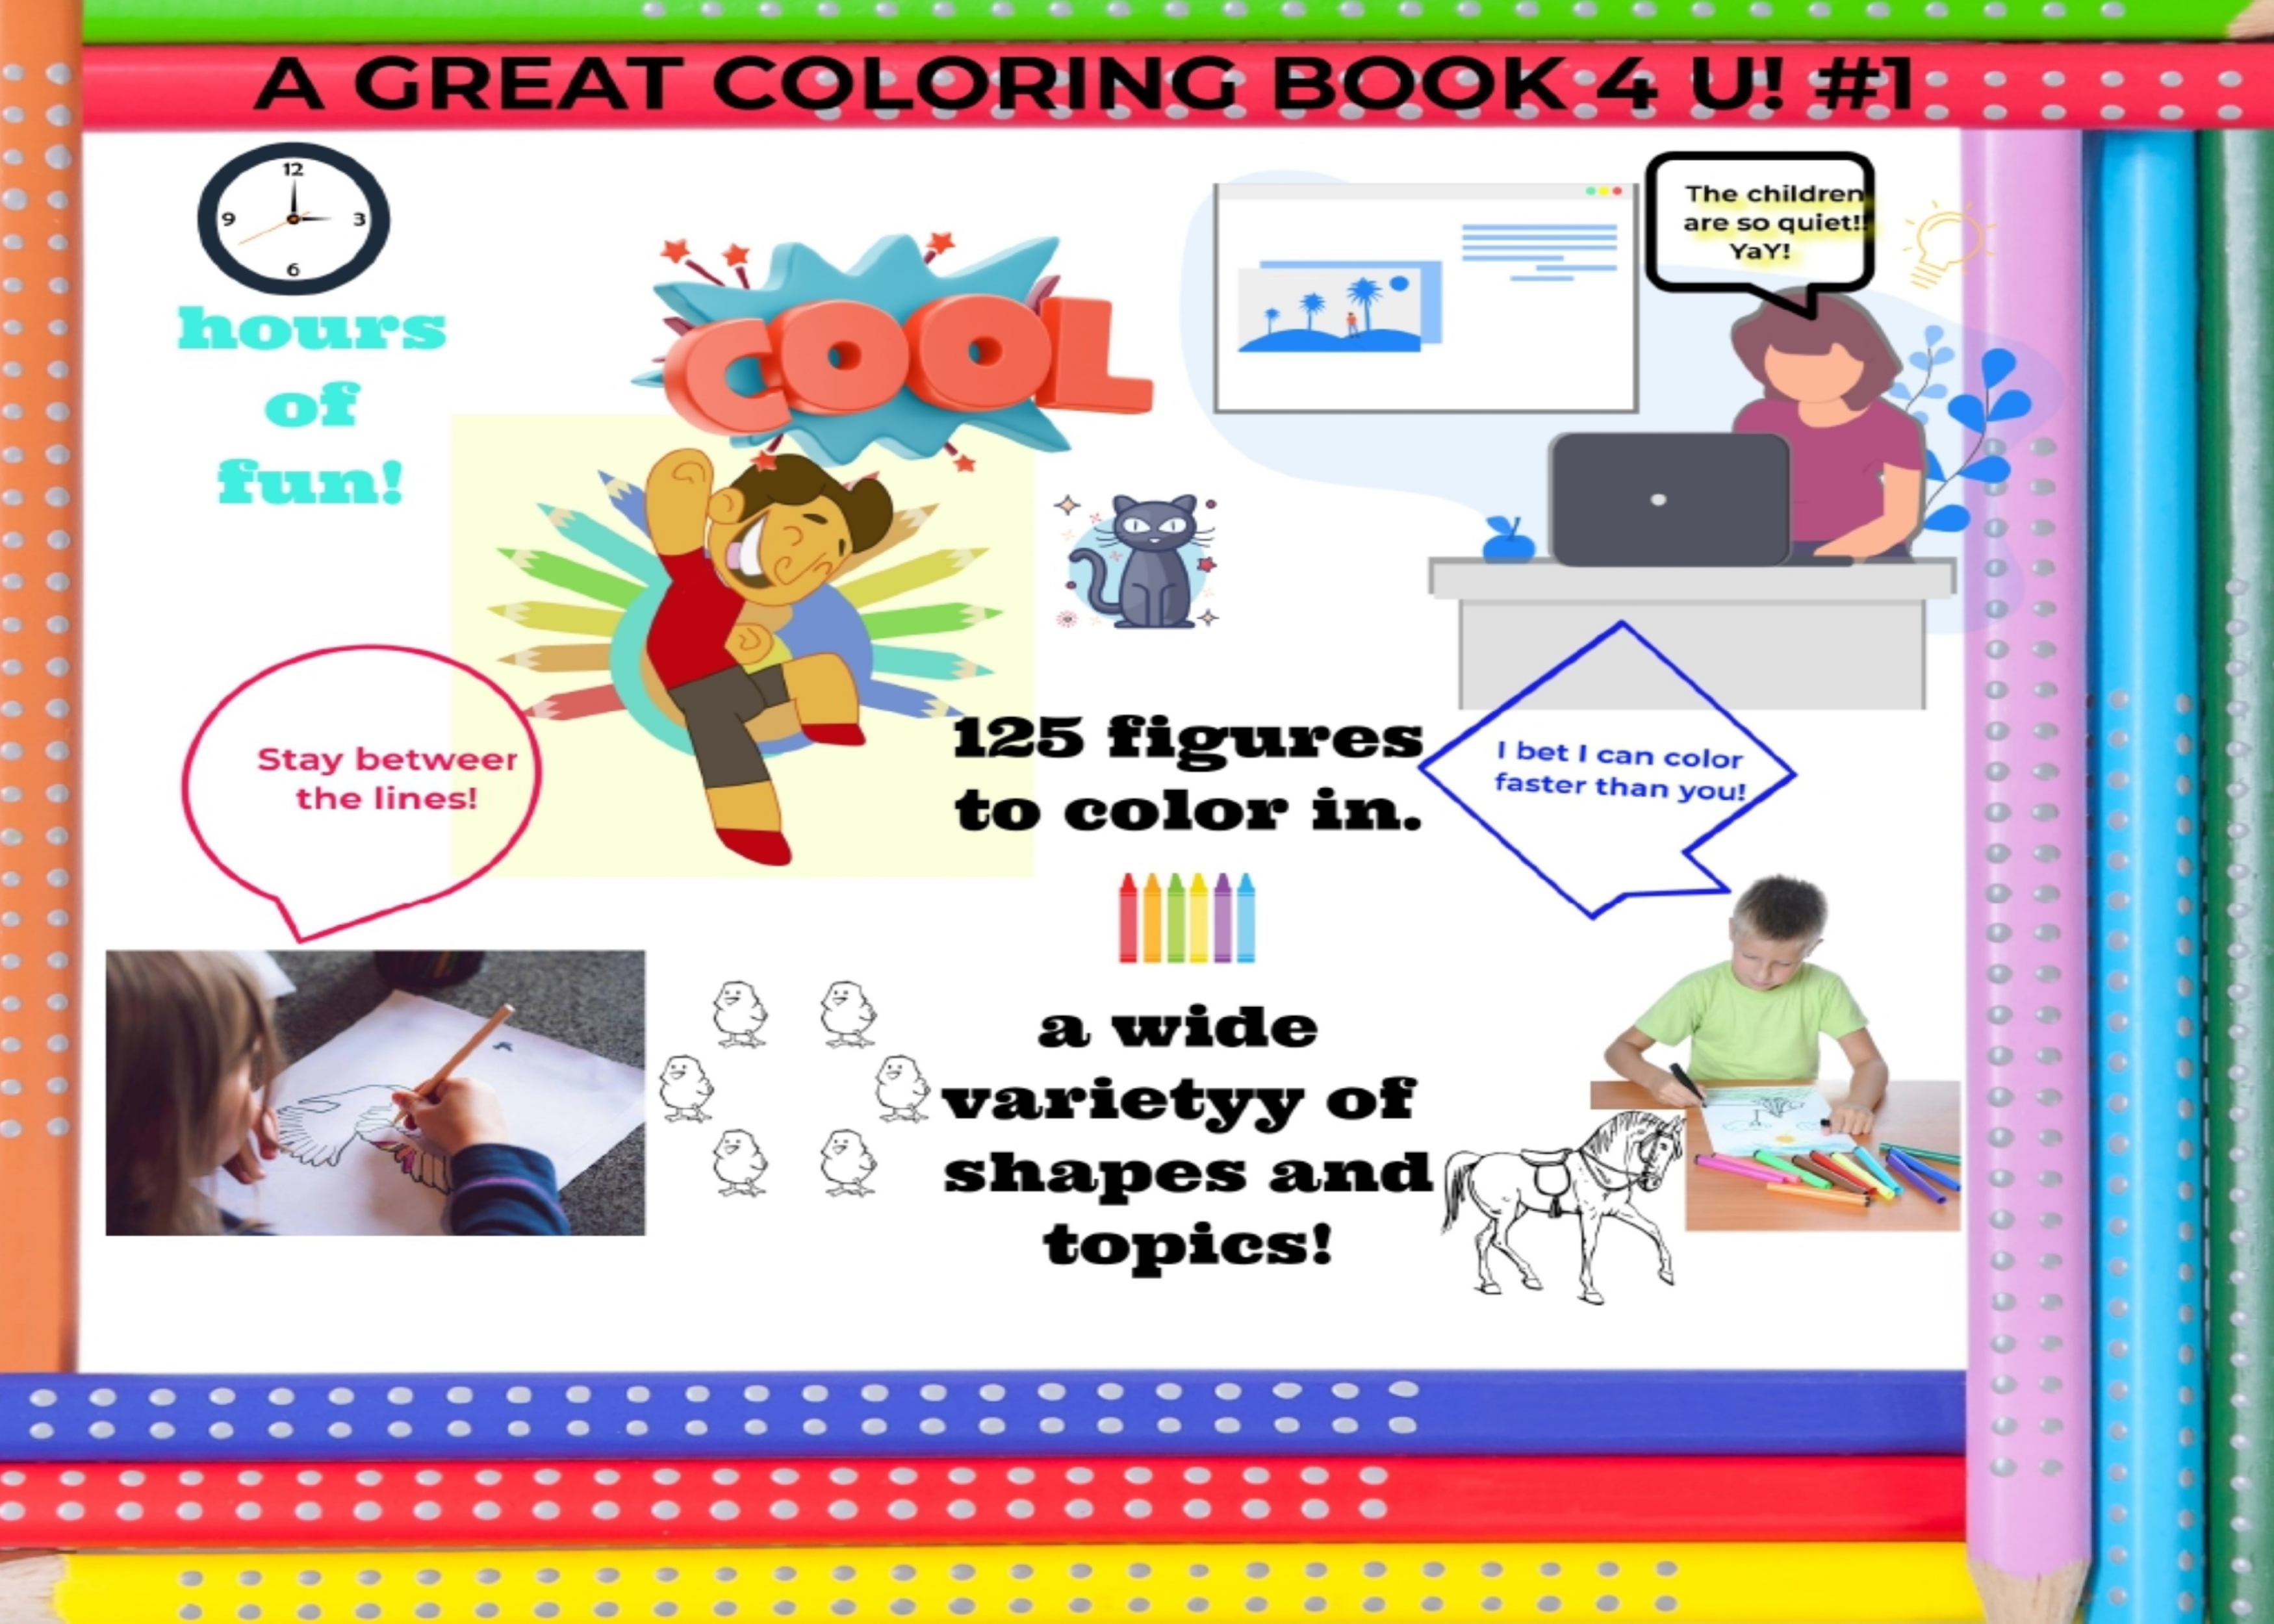 A Great Coloring Book 4U! #1